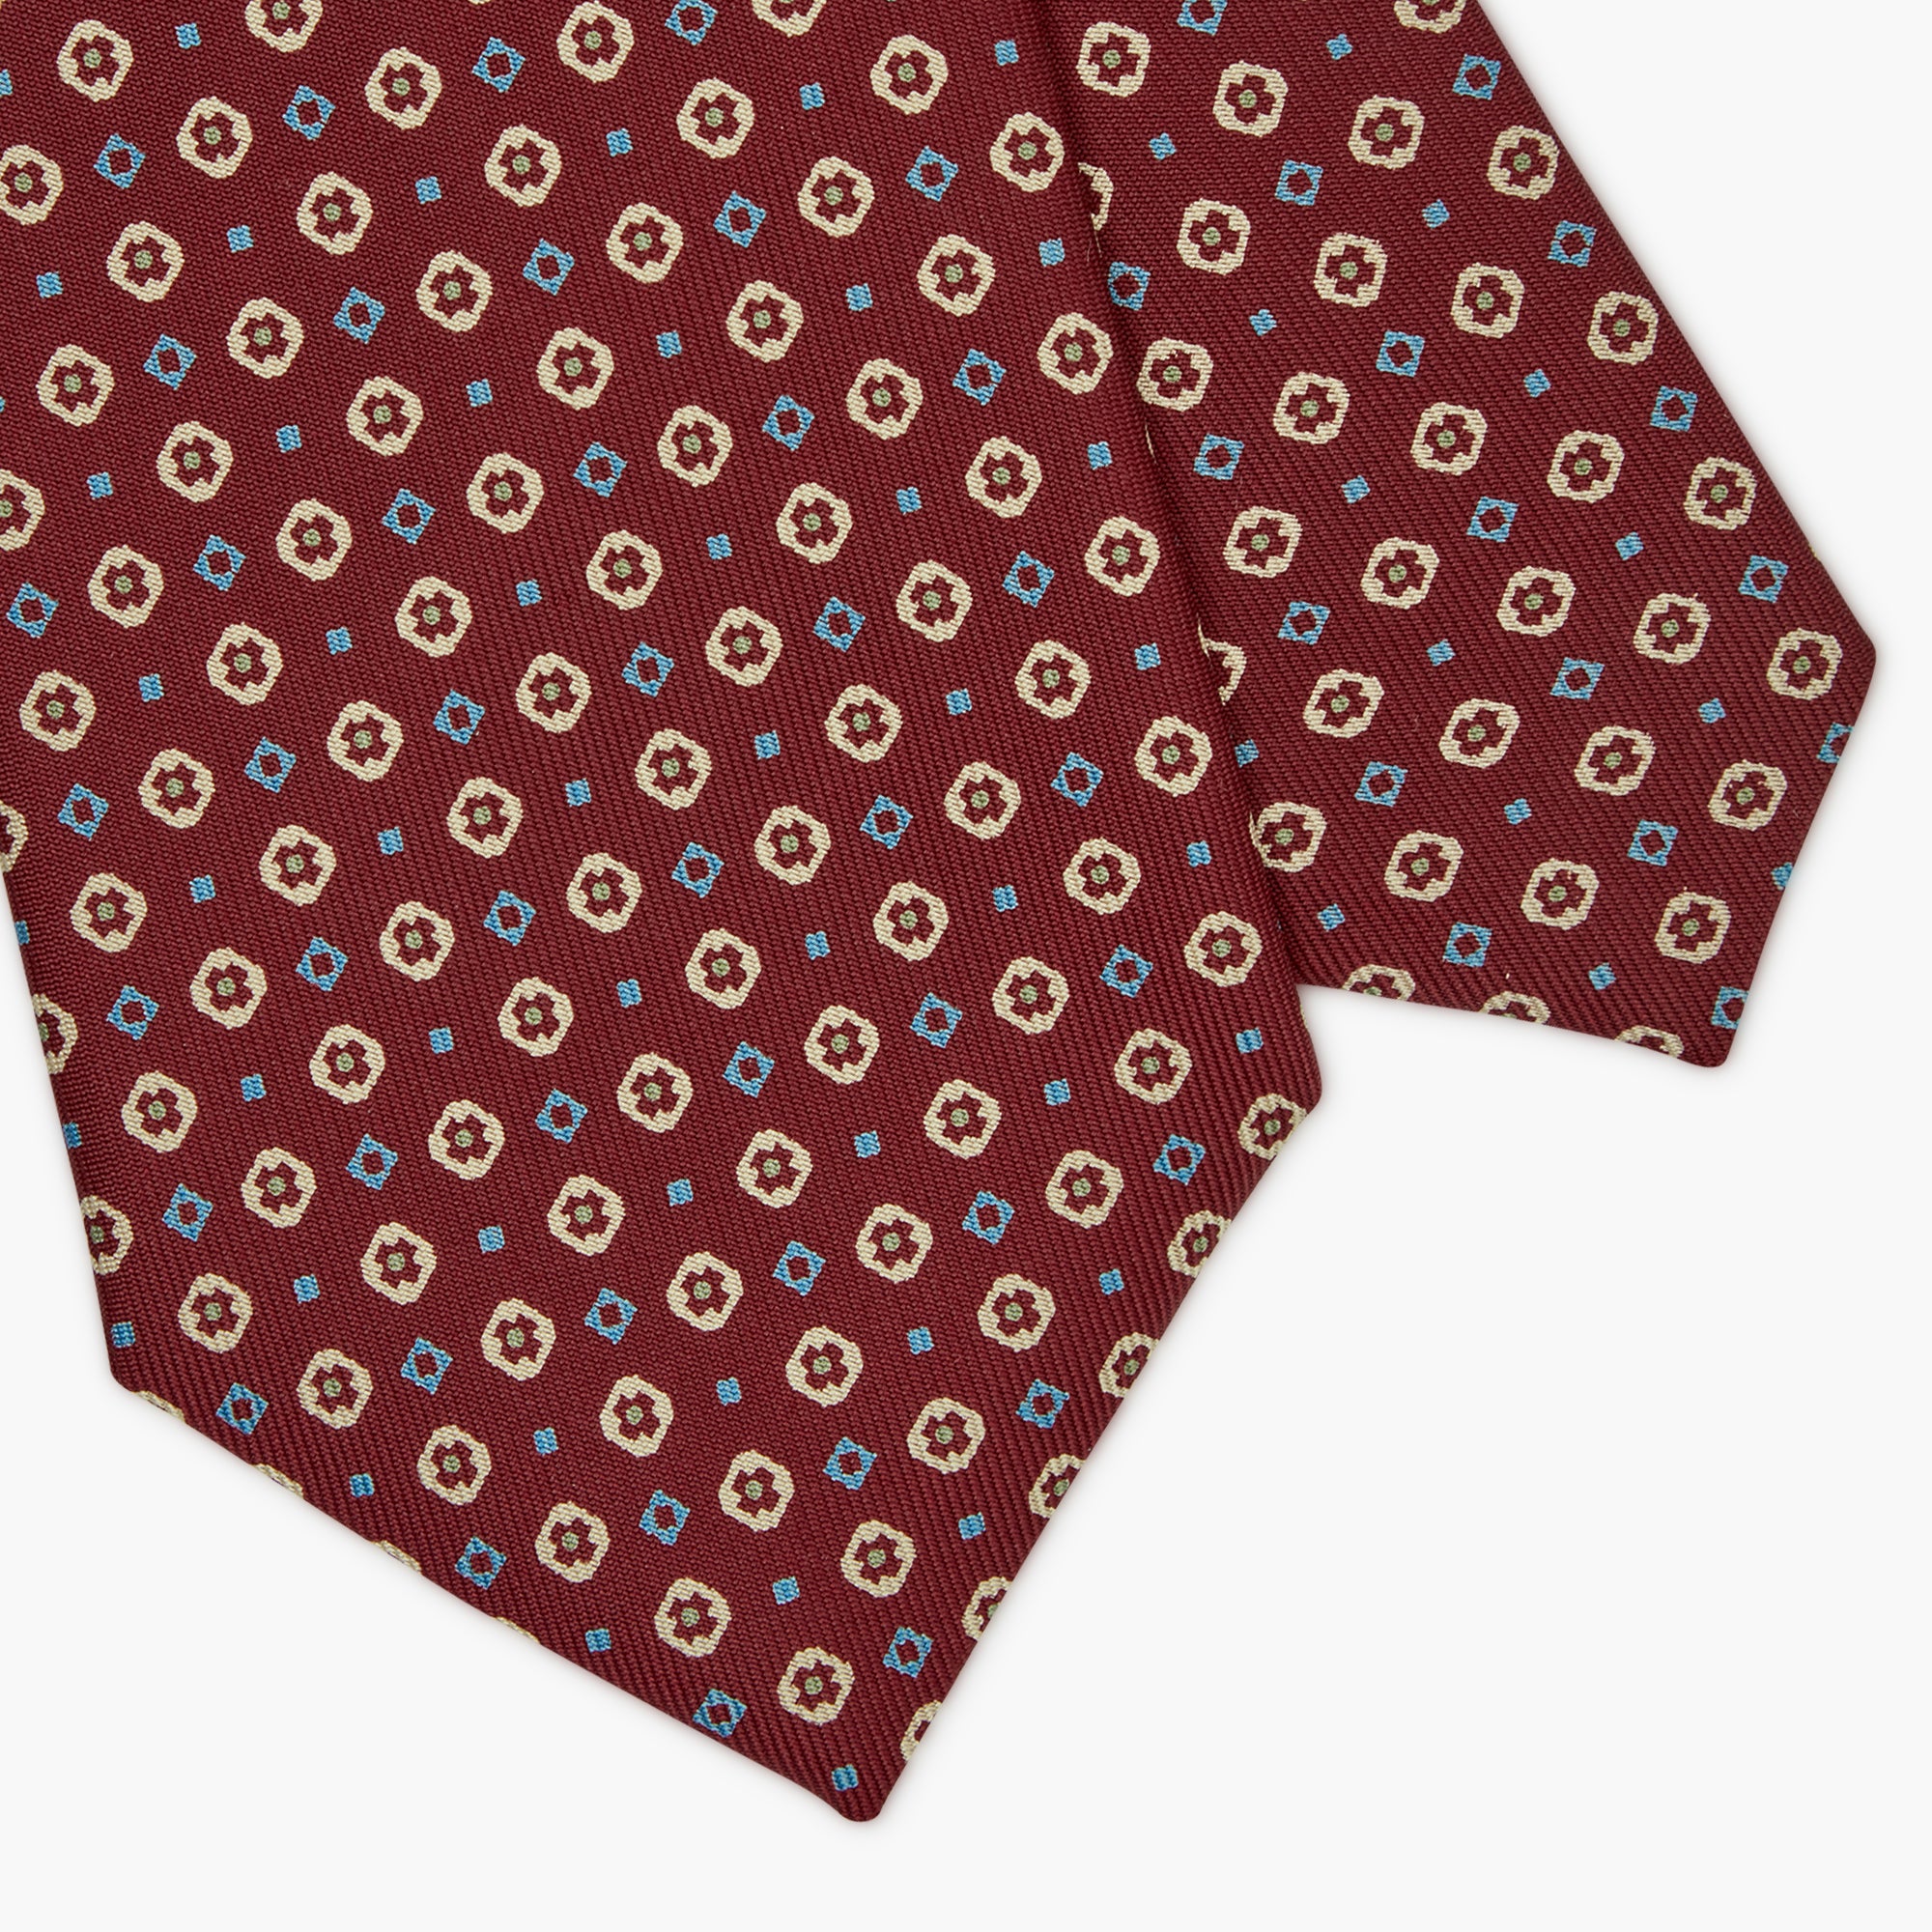 7-Fold Micro Pattern Printed English Silk Tie - Burgundy